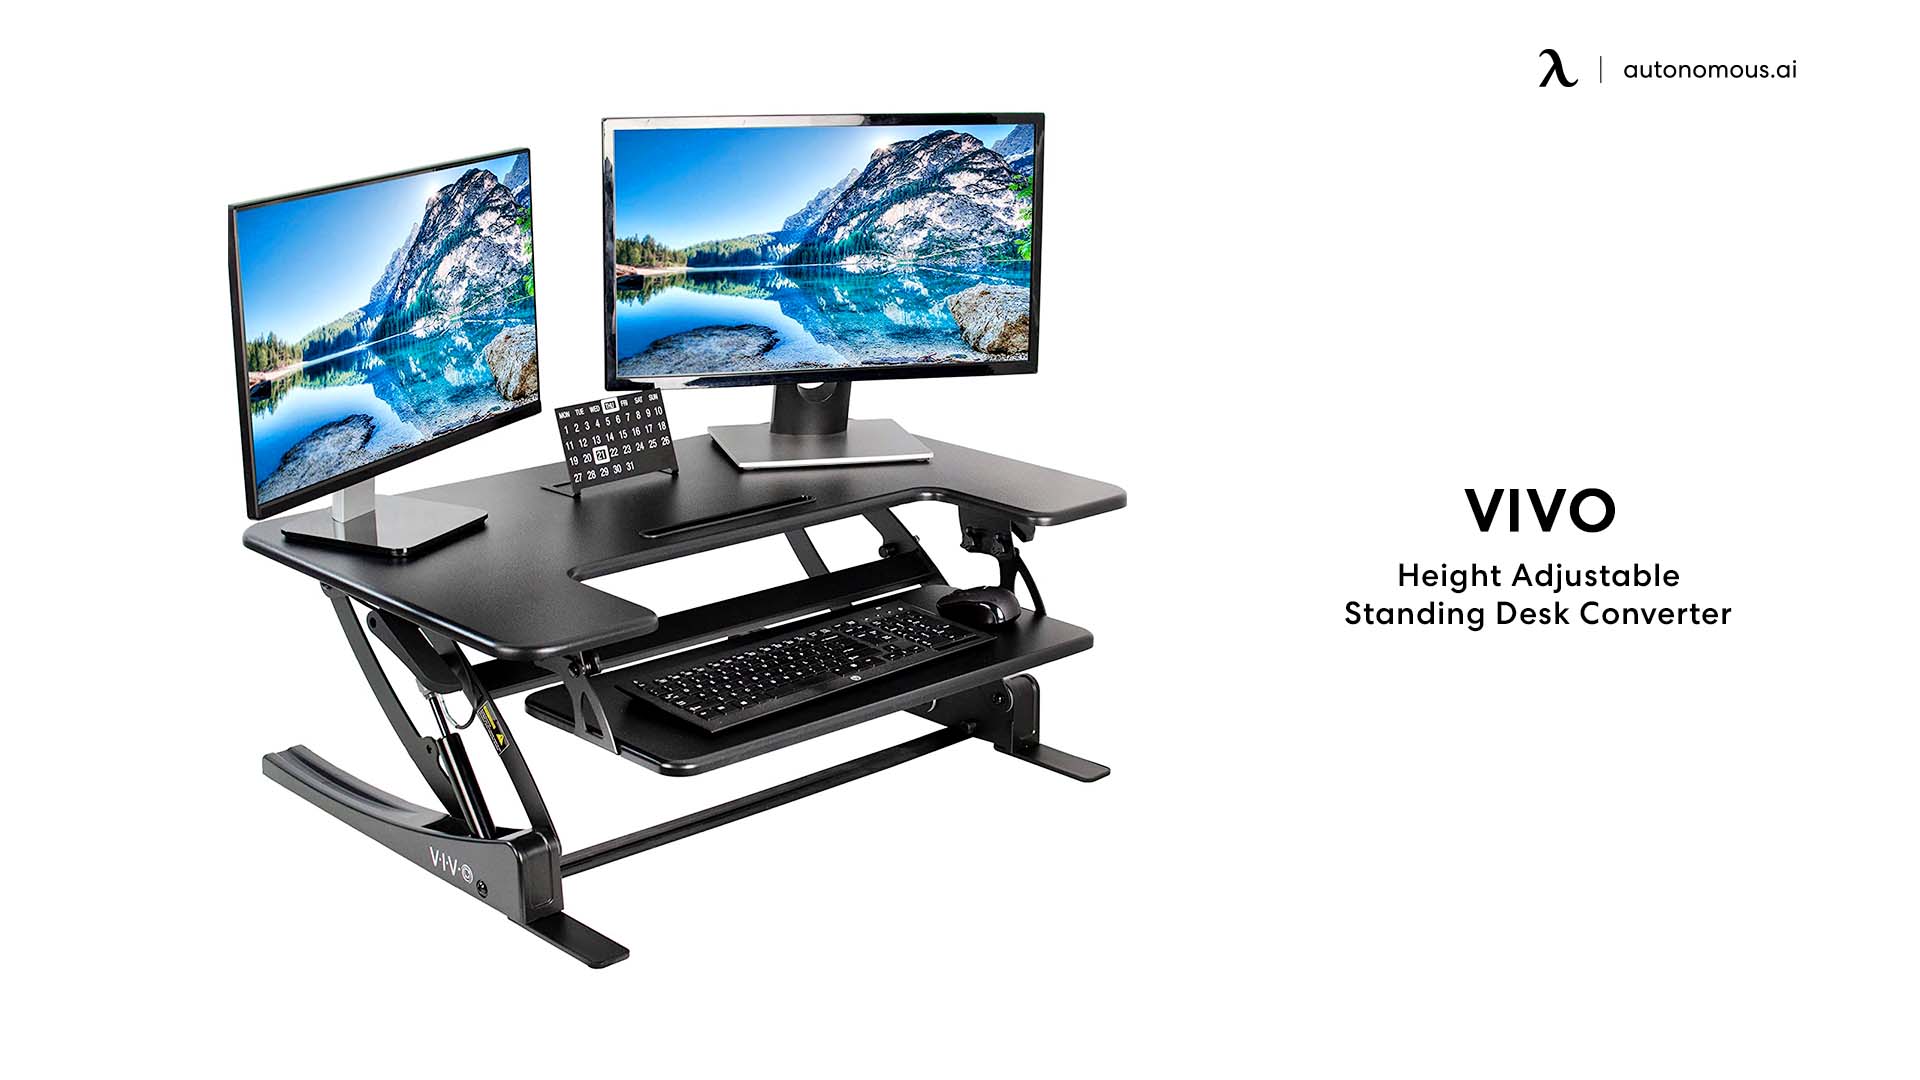 VIVO Height Adjustable Standing Desk Converter